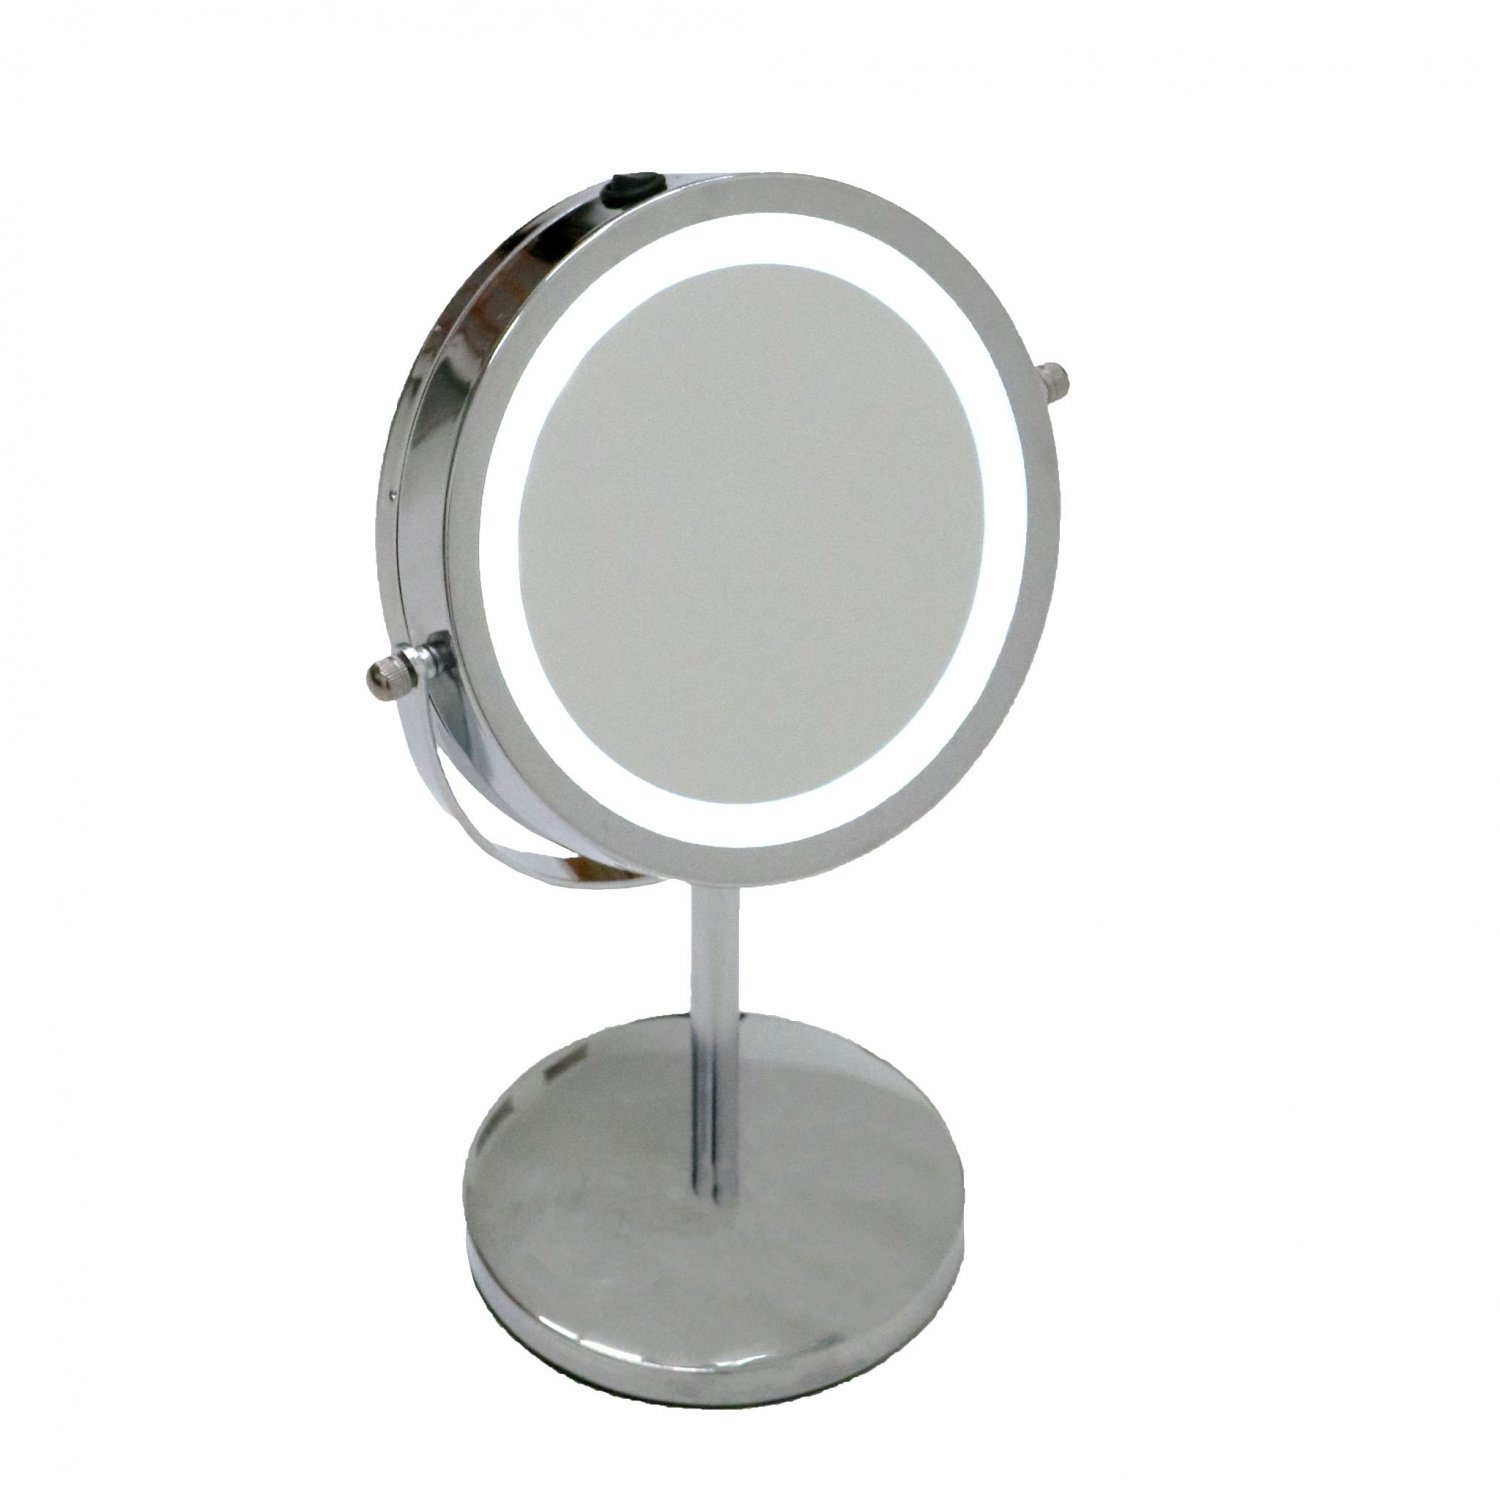 5x Magnifying Illuminated LED Makeup Cosmetic Shaving Mirror